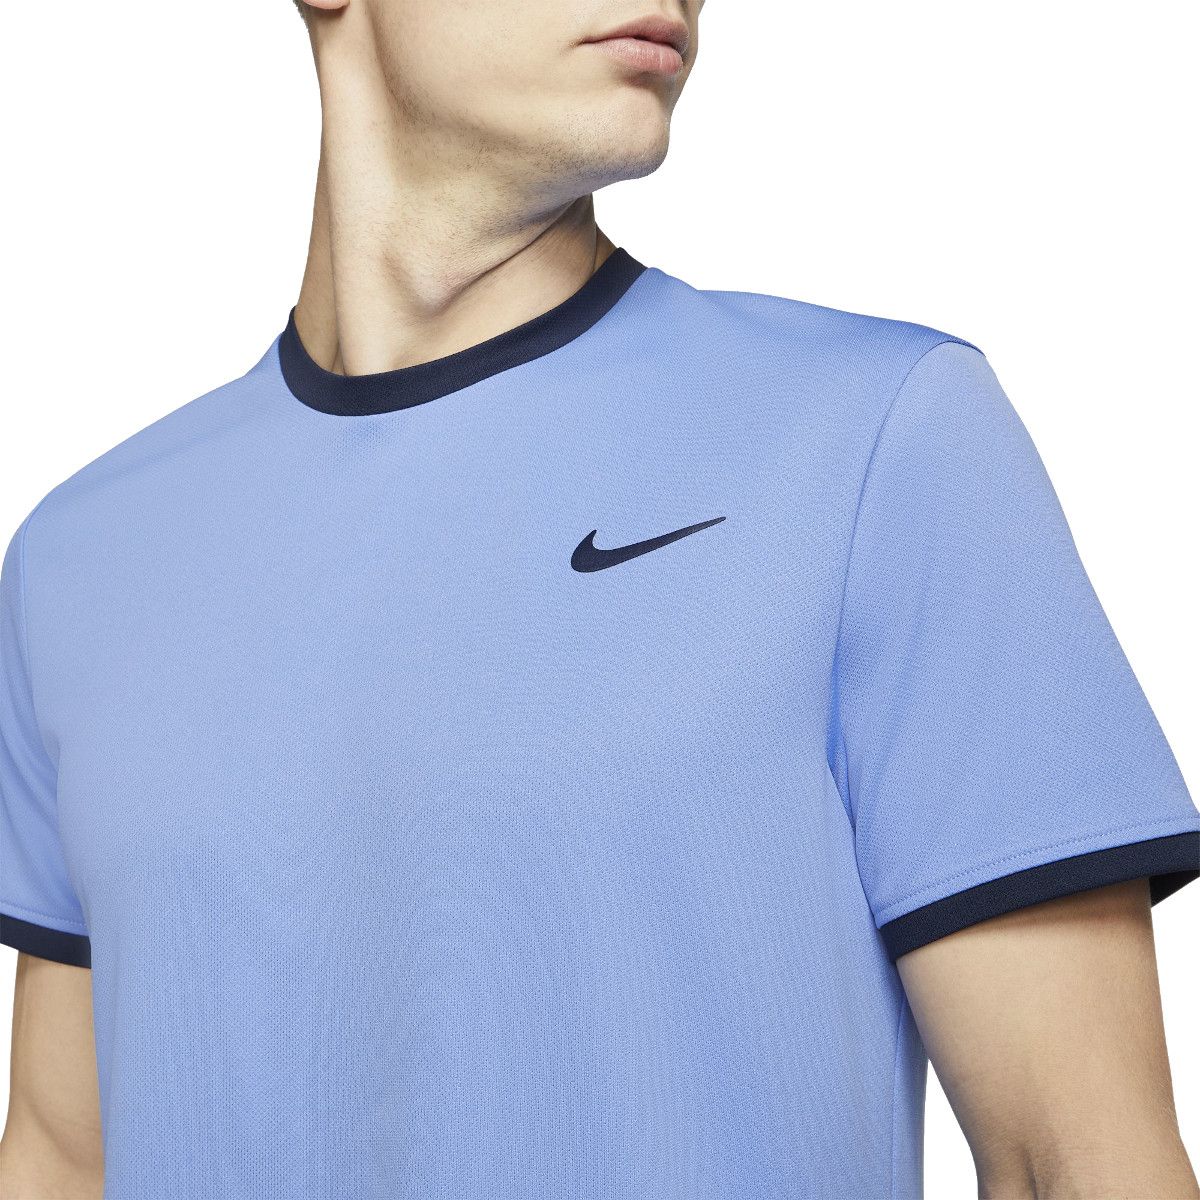 NikeCourt Dry Men's Tennis T-shirt 939134-478